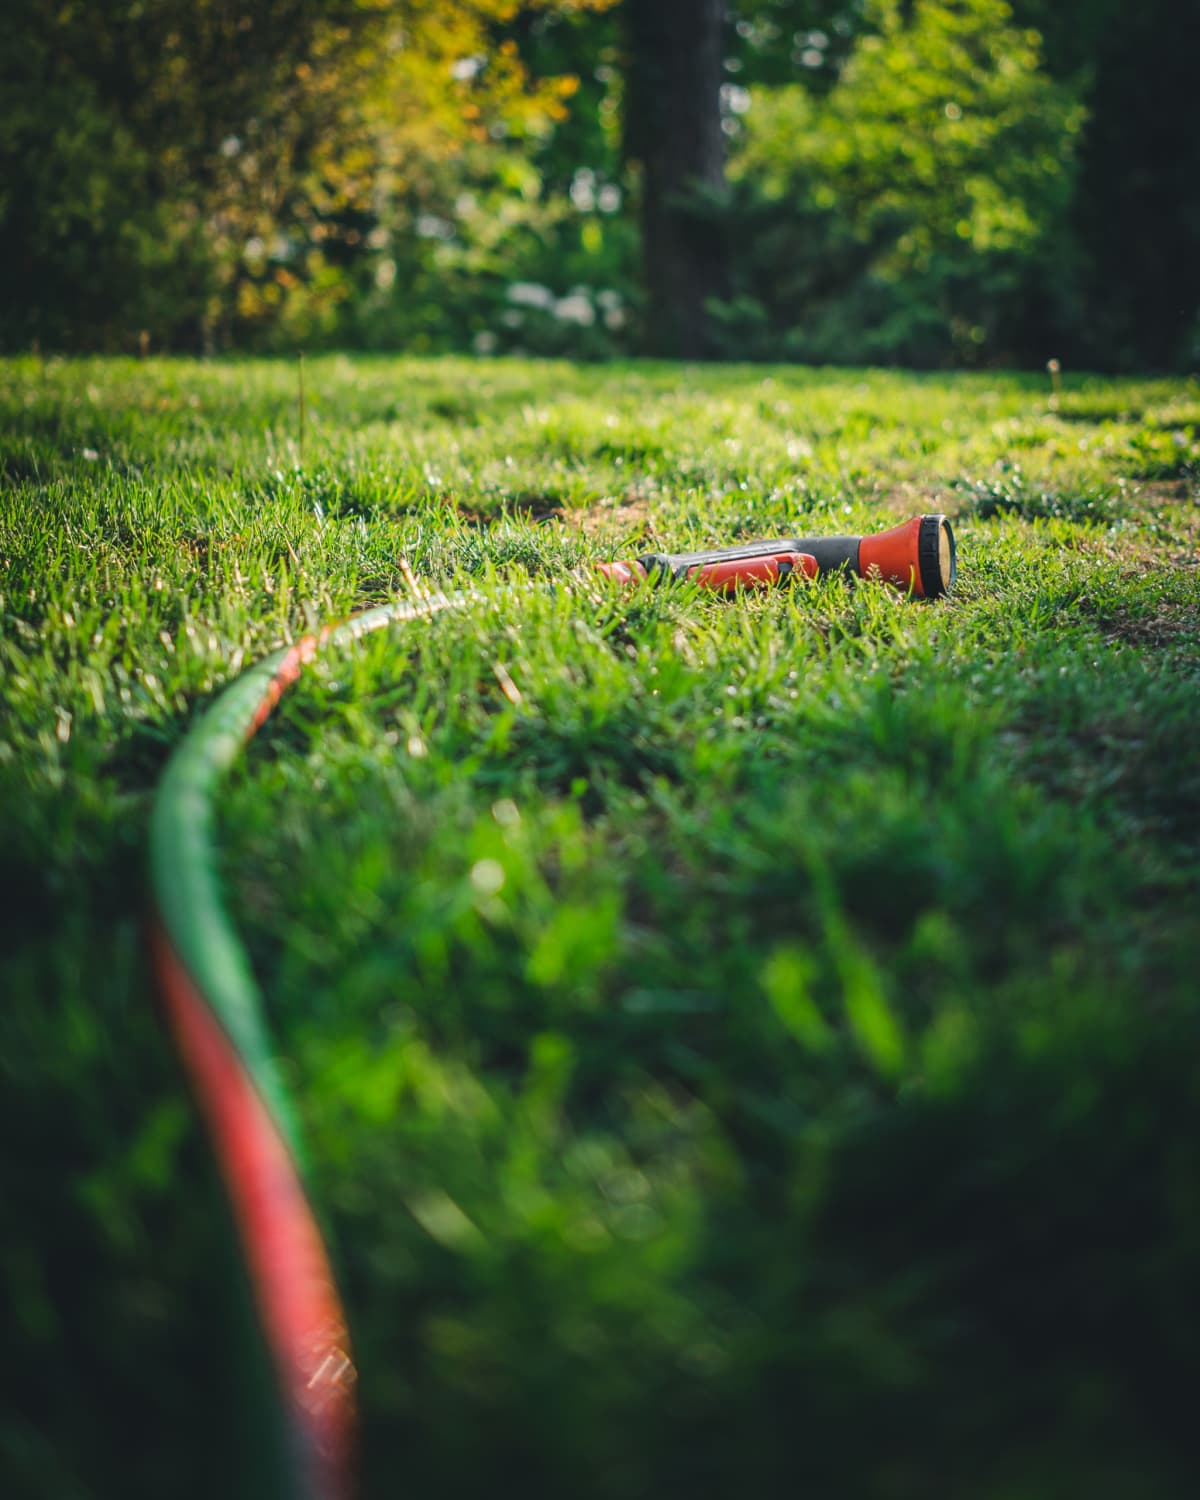 A closeup of a colorful garden hose on the grass